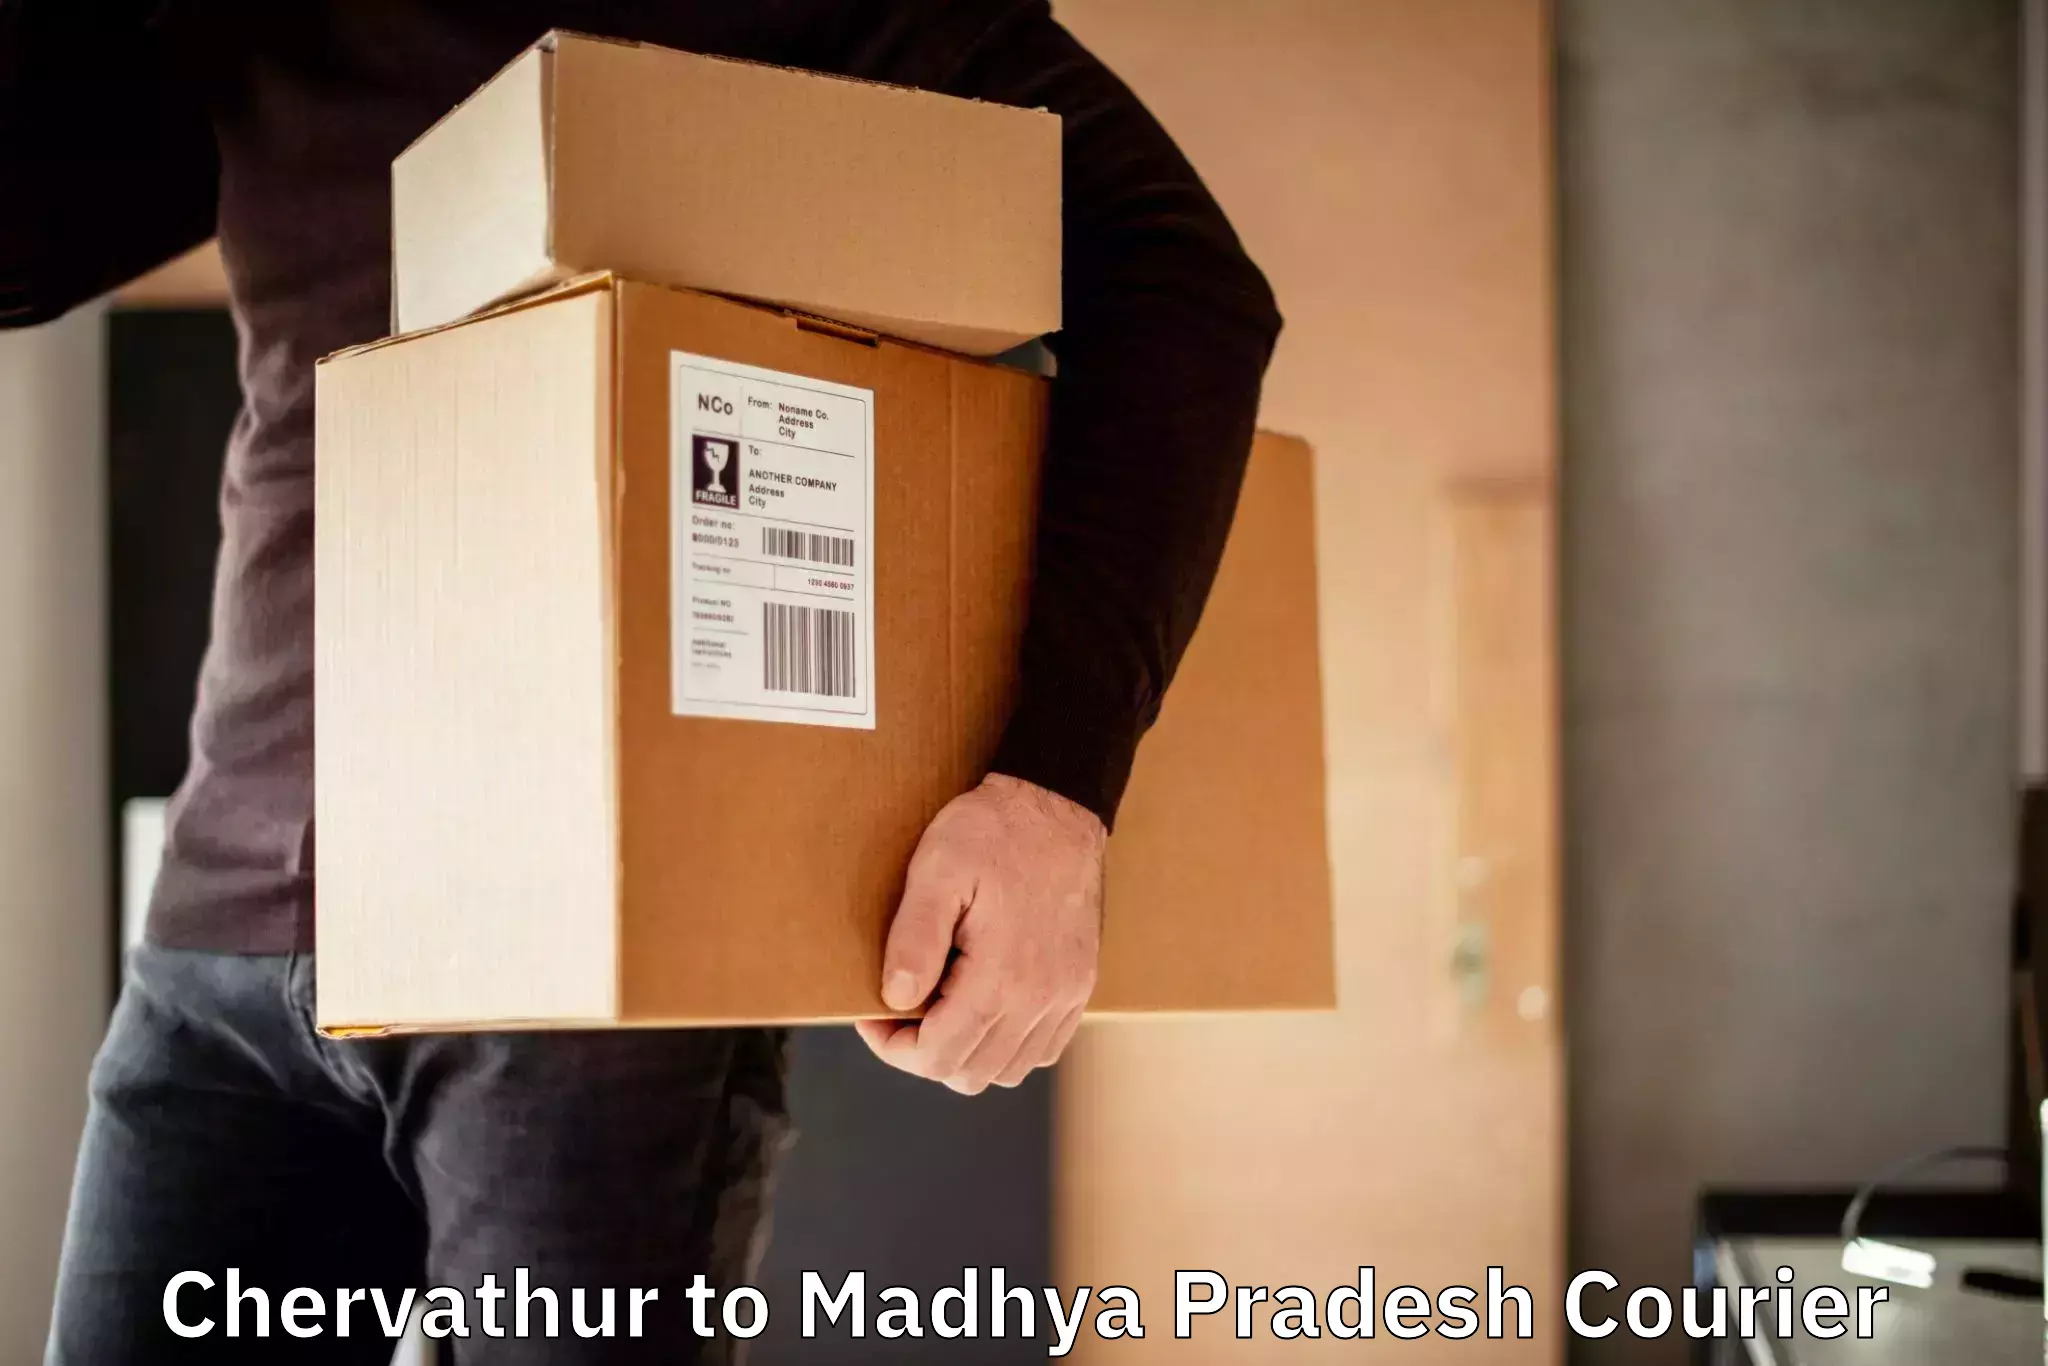 Courier service partnerships Chervathur to Dewas